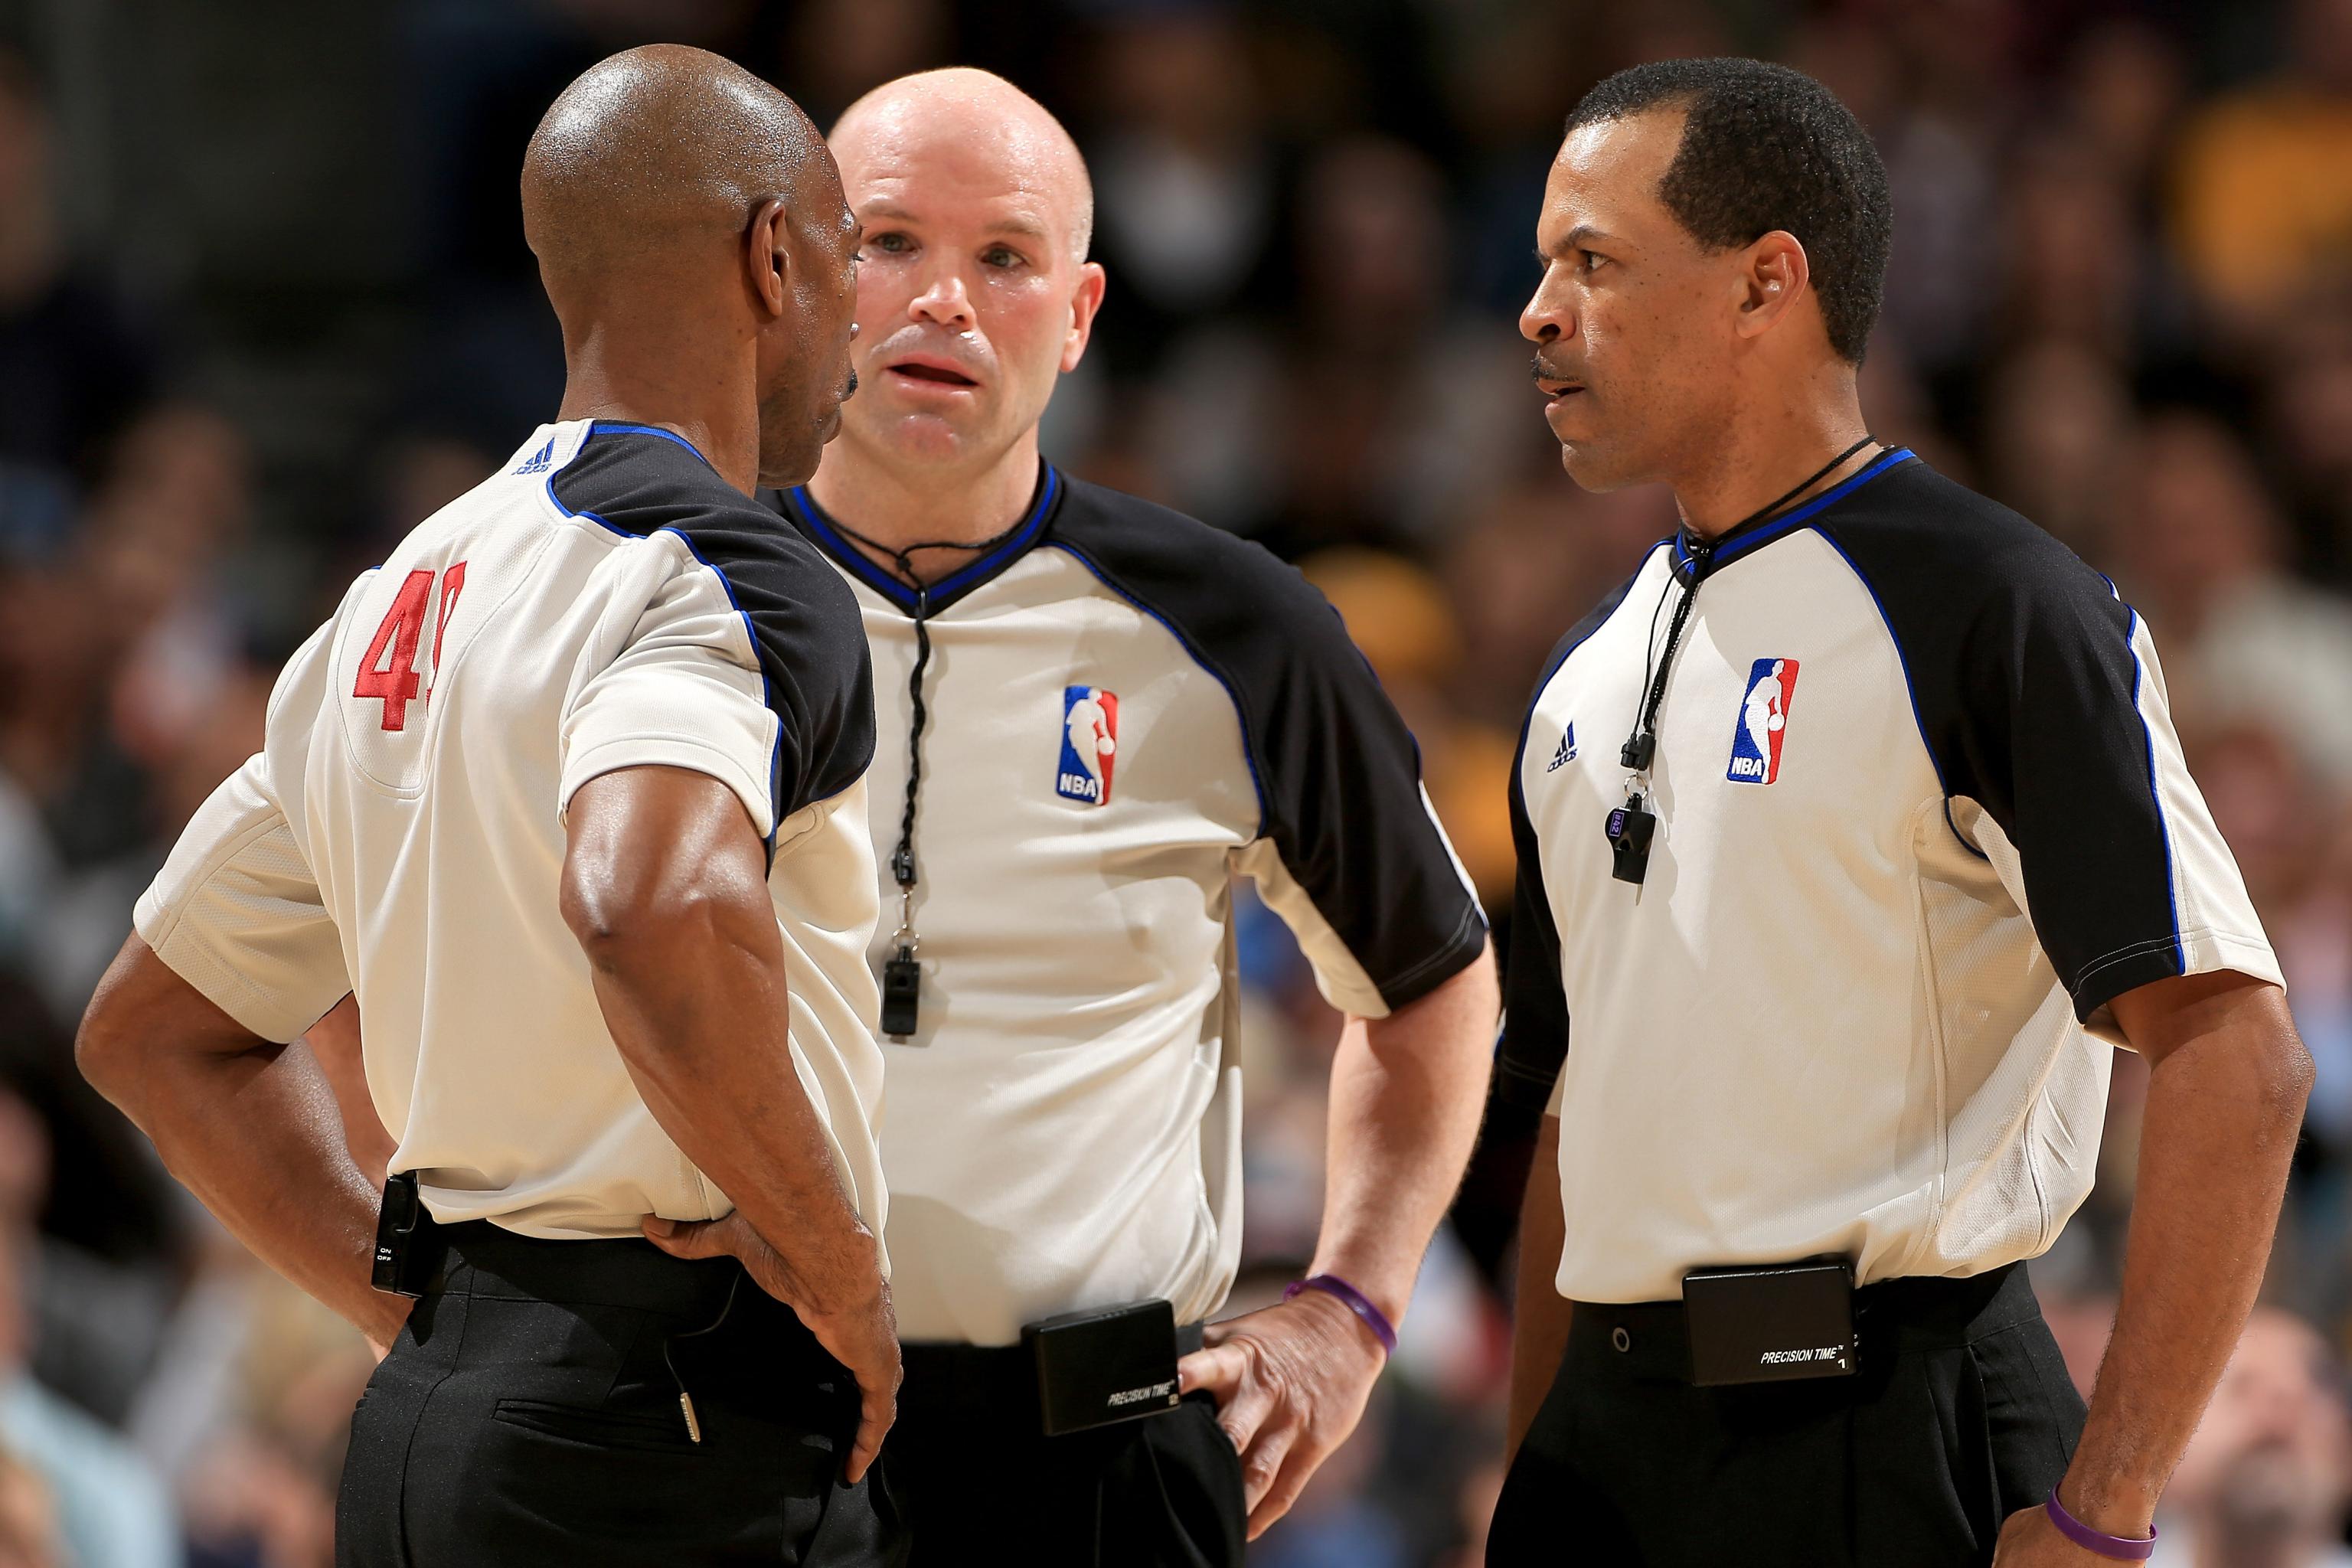 nba basketball referee uniform